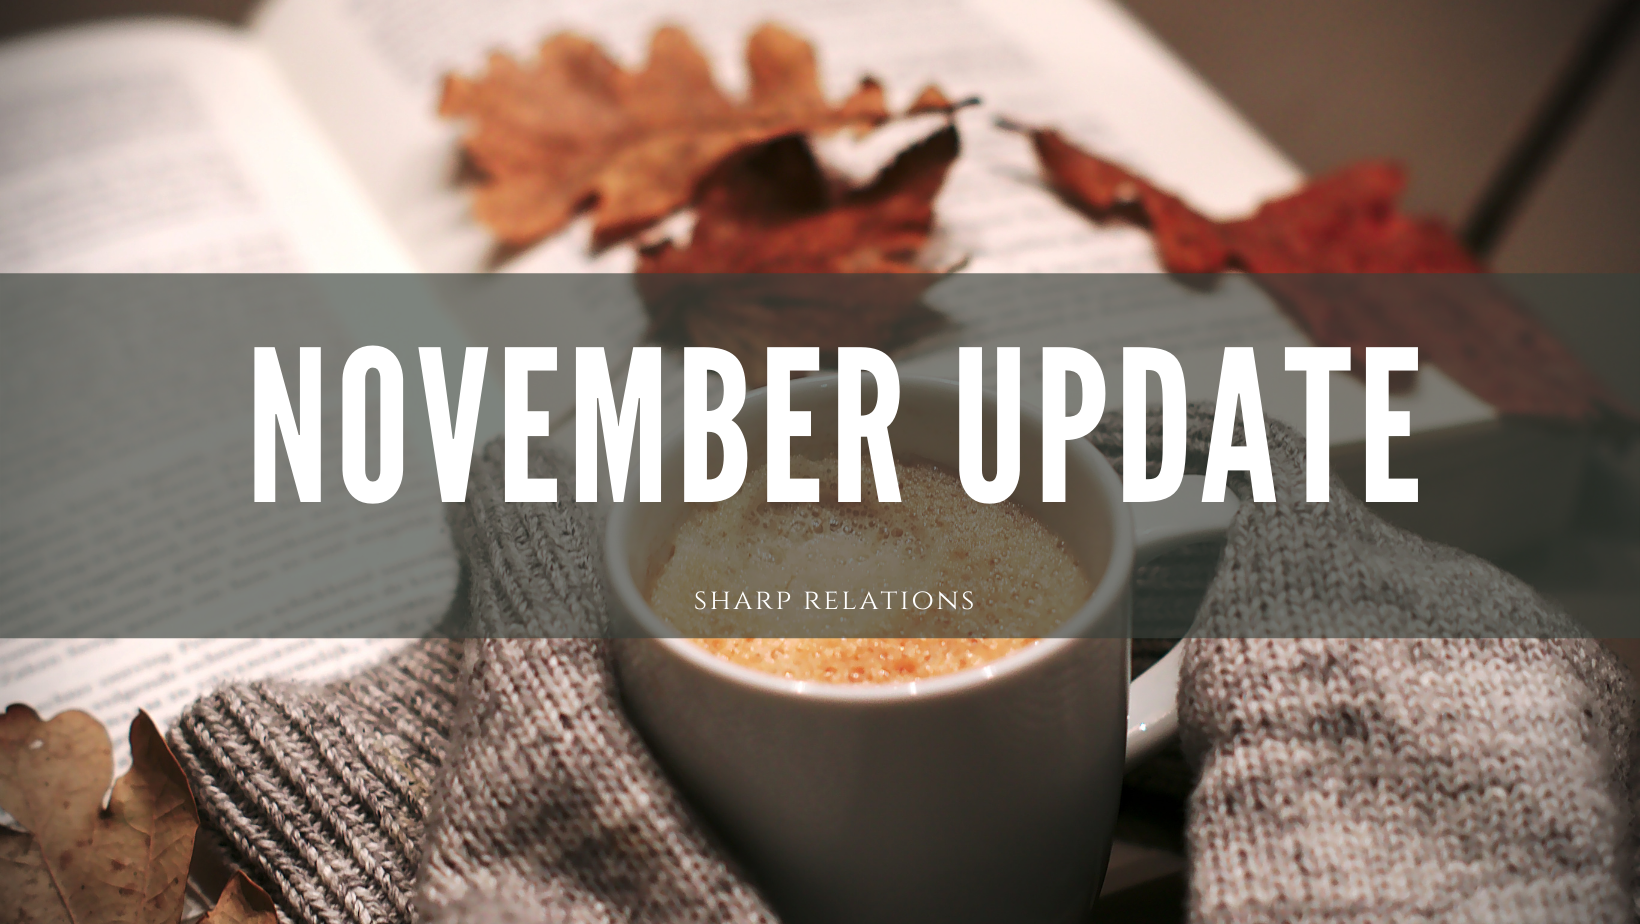 November update